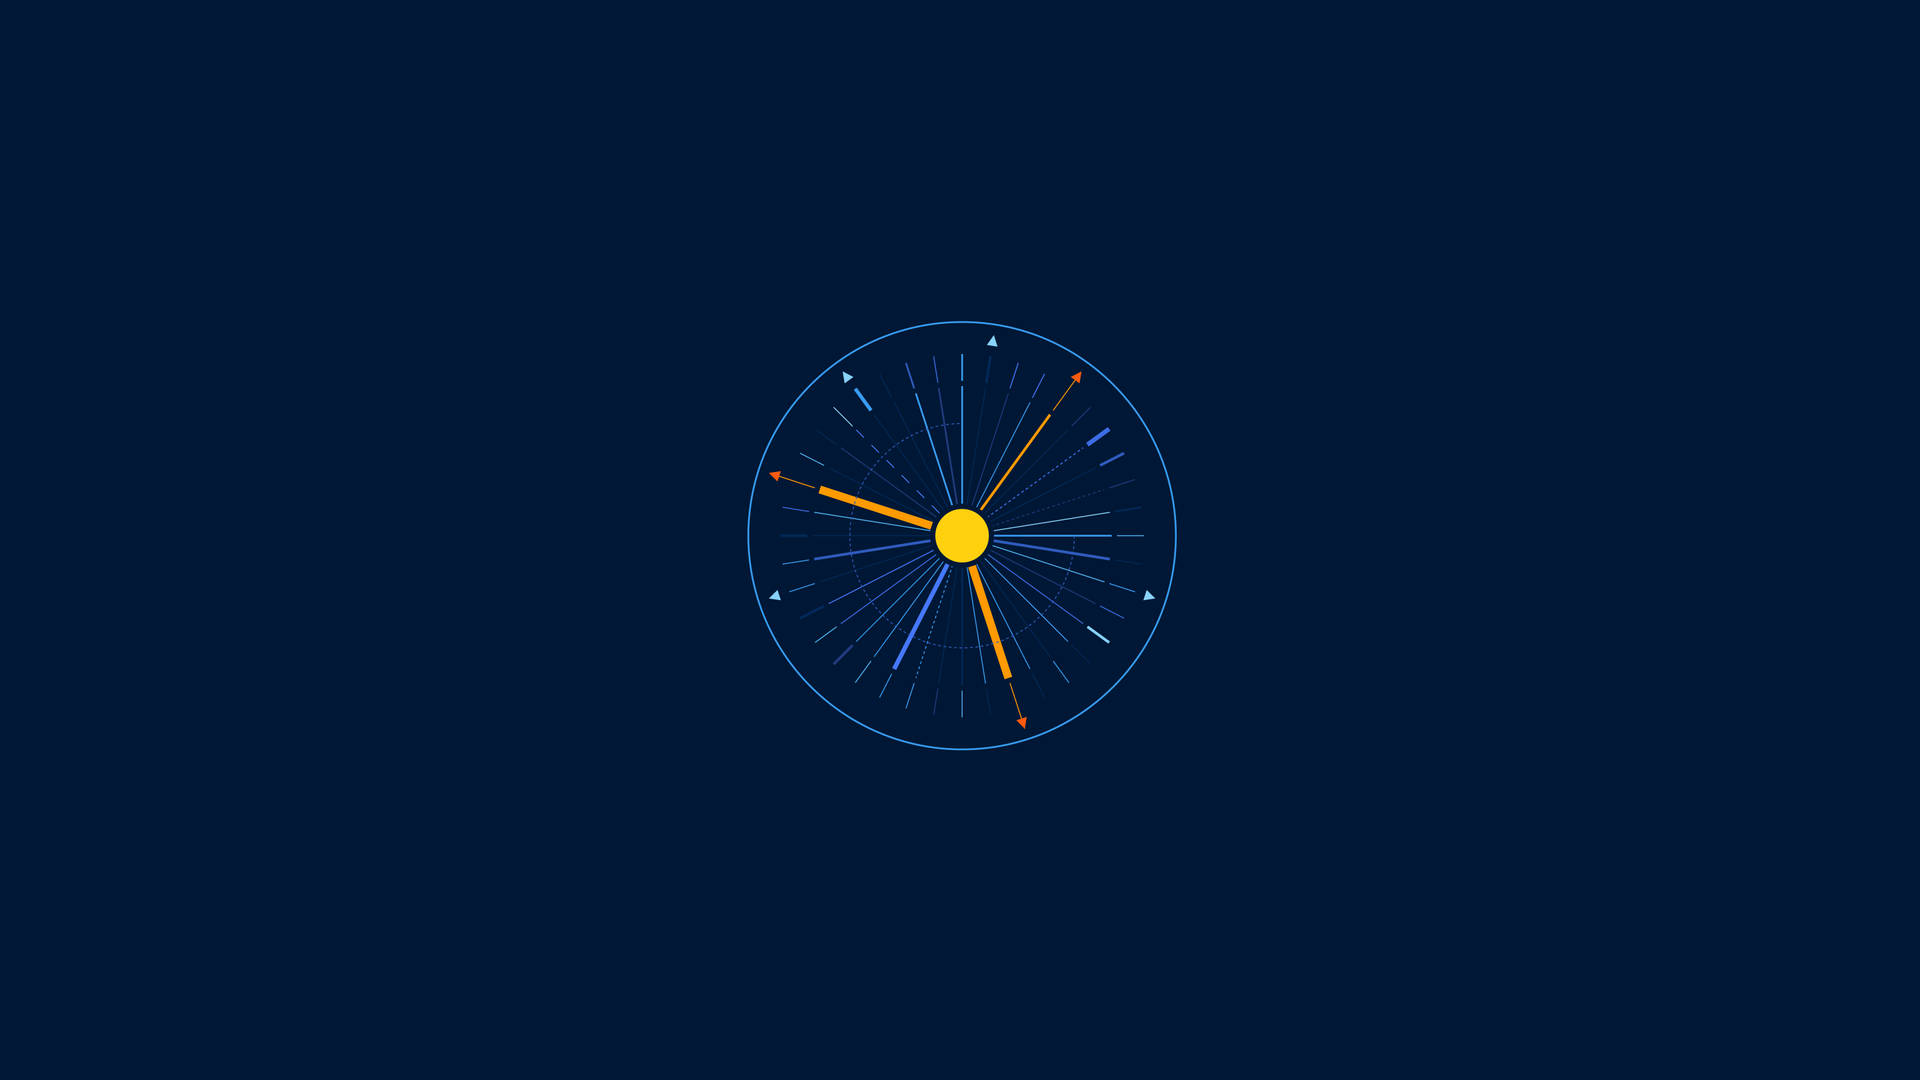 Minimalist Time Clock Background